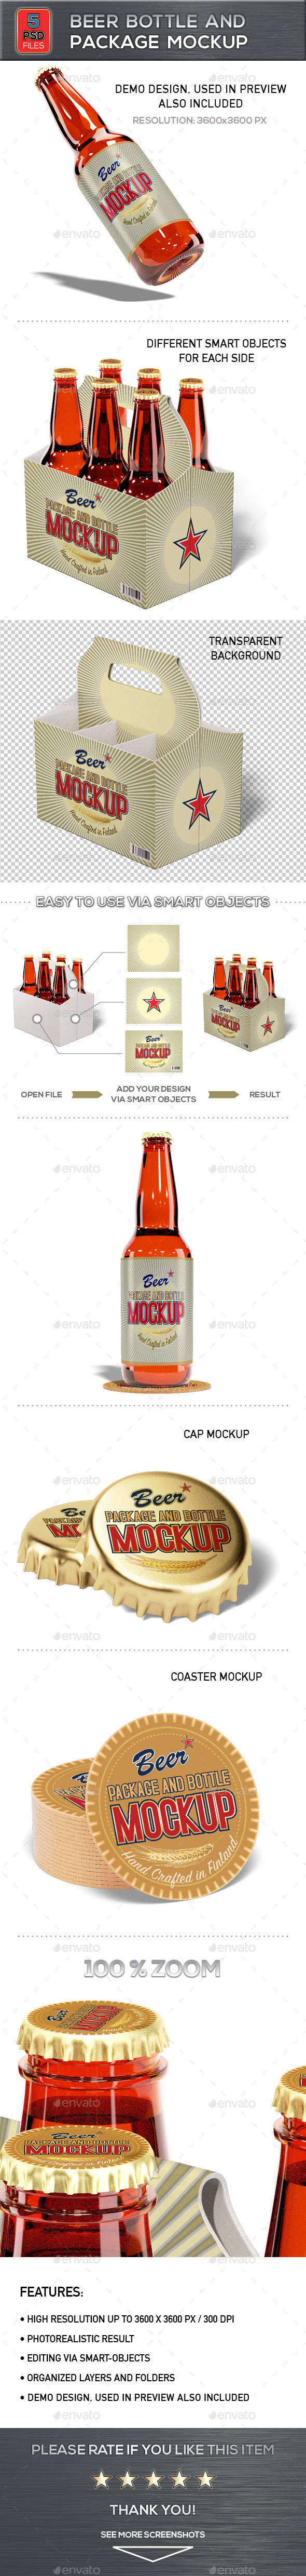 Beer Bottle and Package Mockup